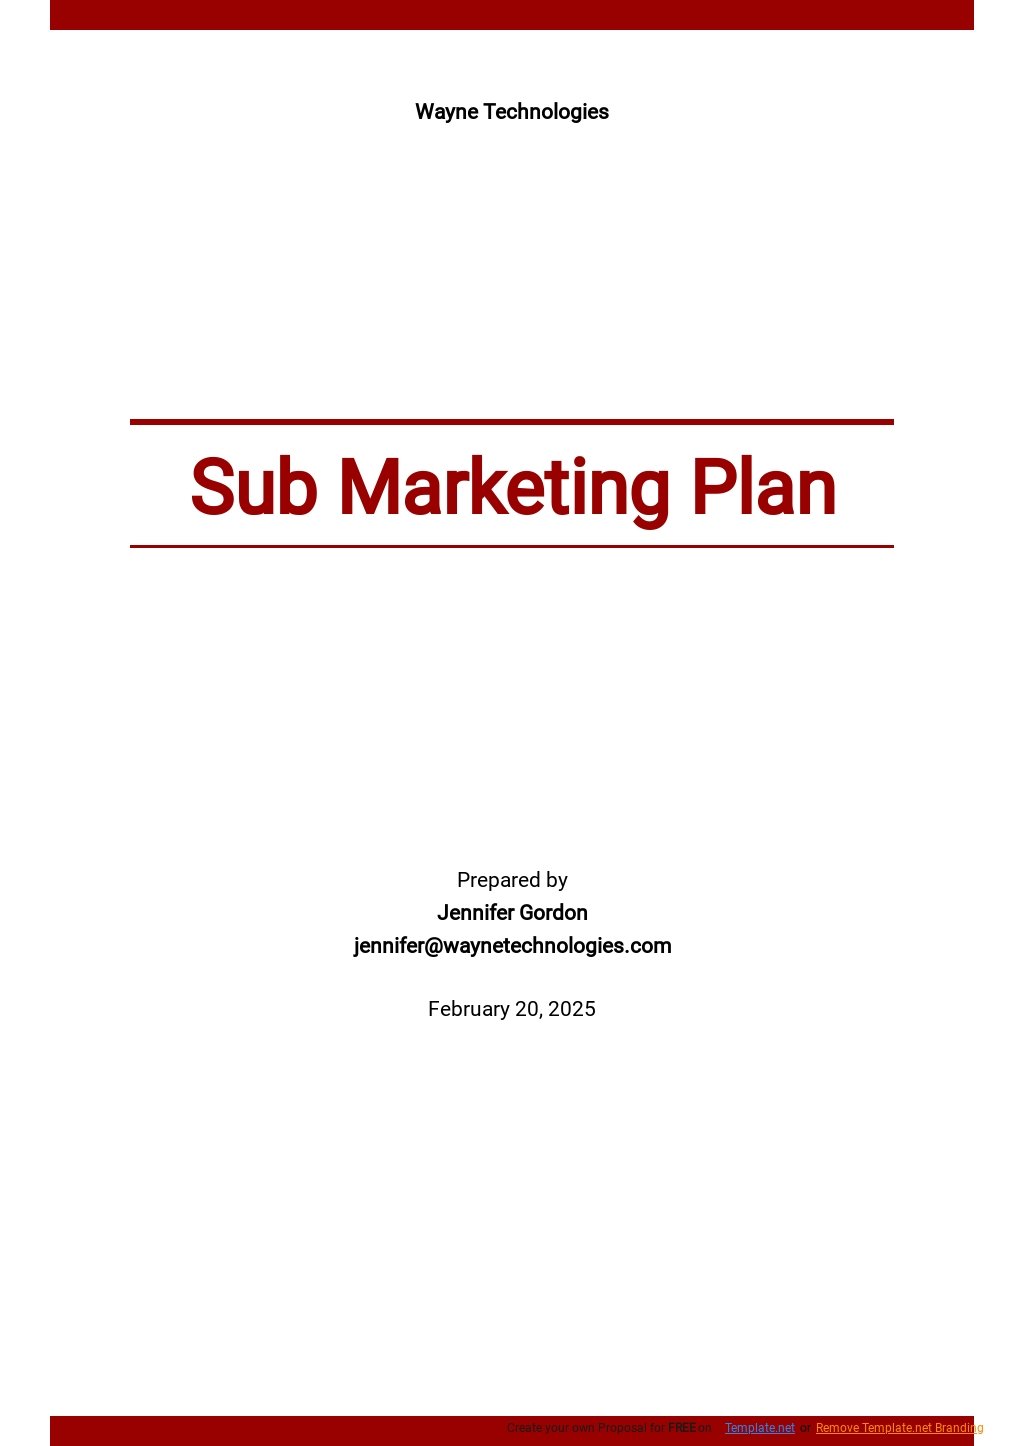 Sub Marketing Plan Template